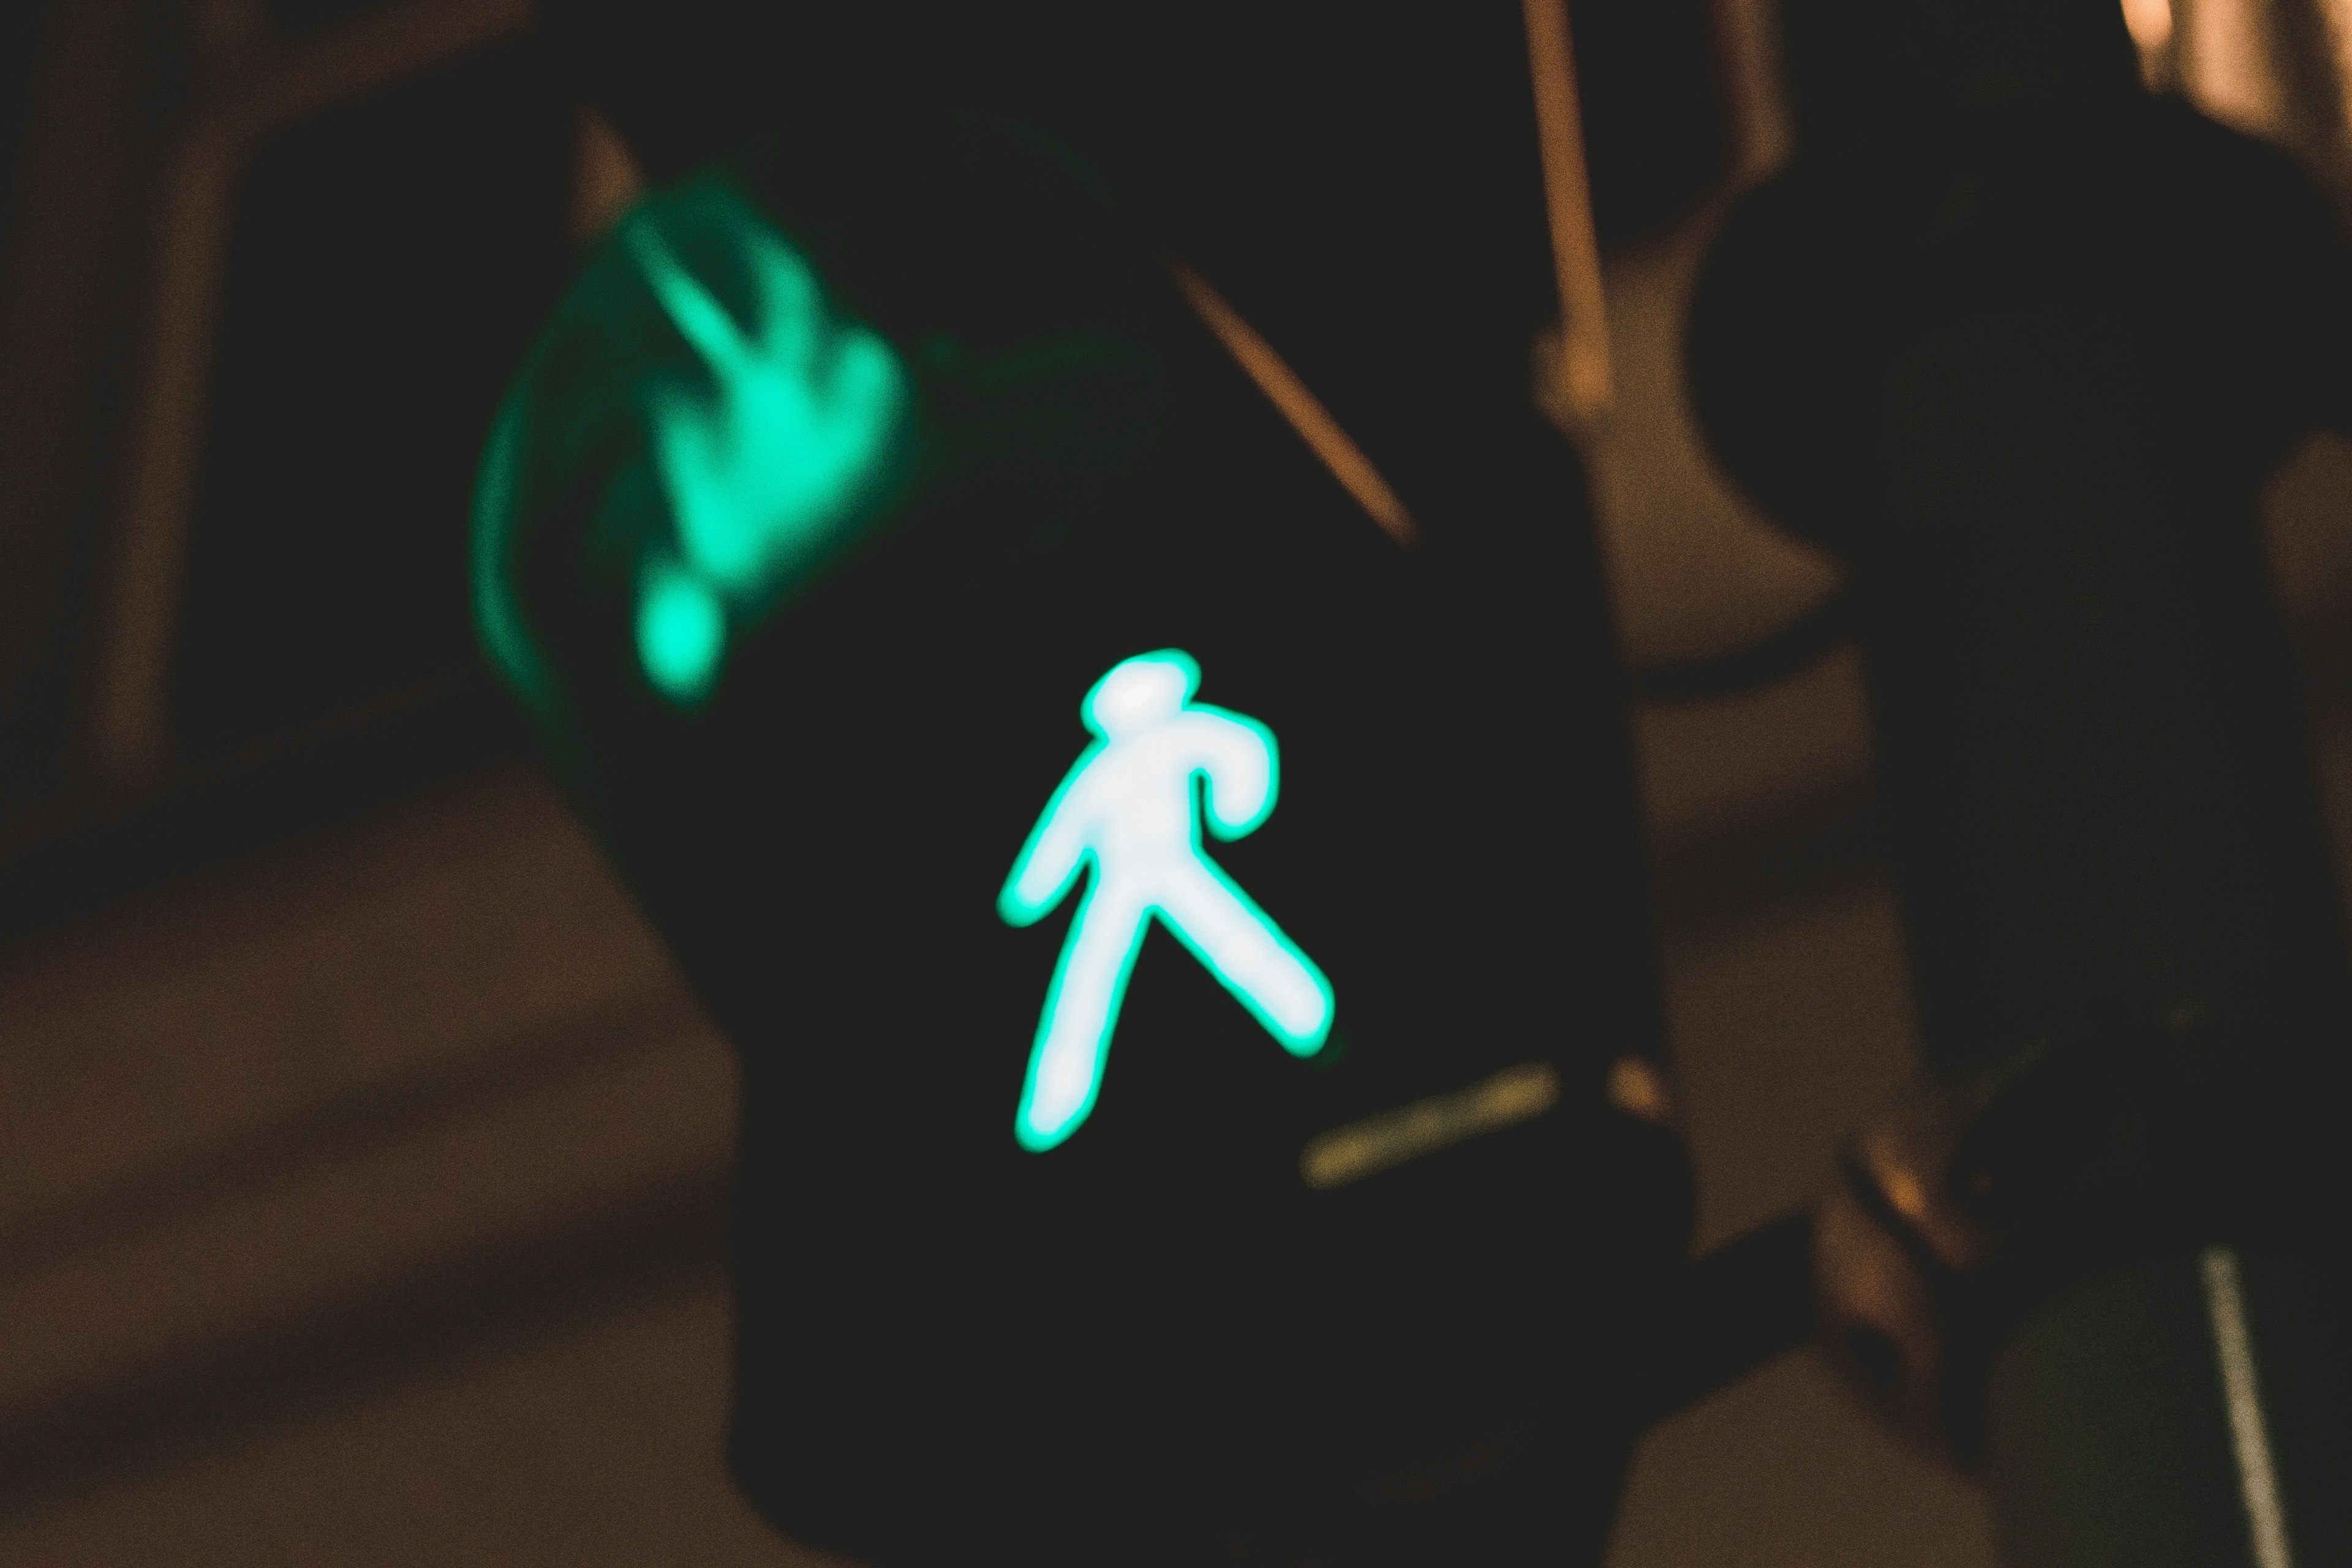 illuminated green pedestrian walk light at night